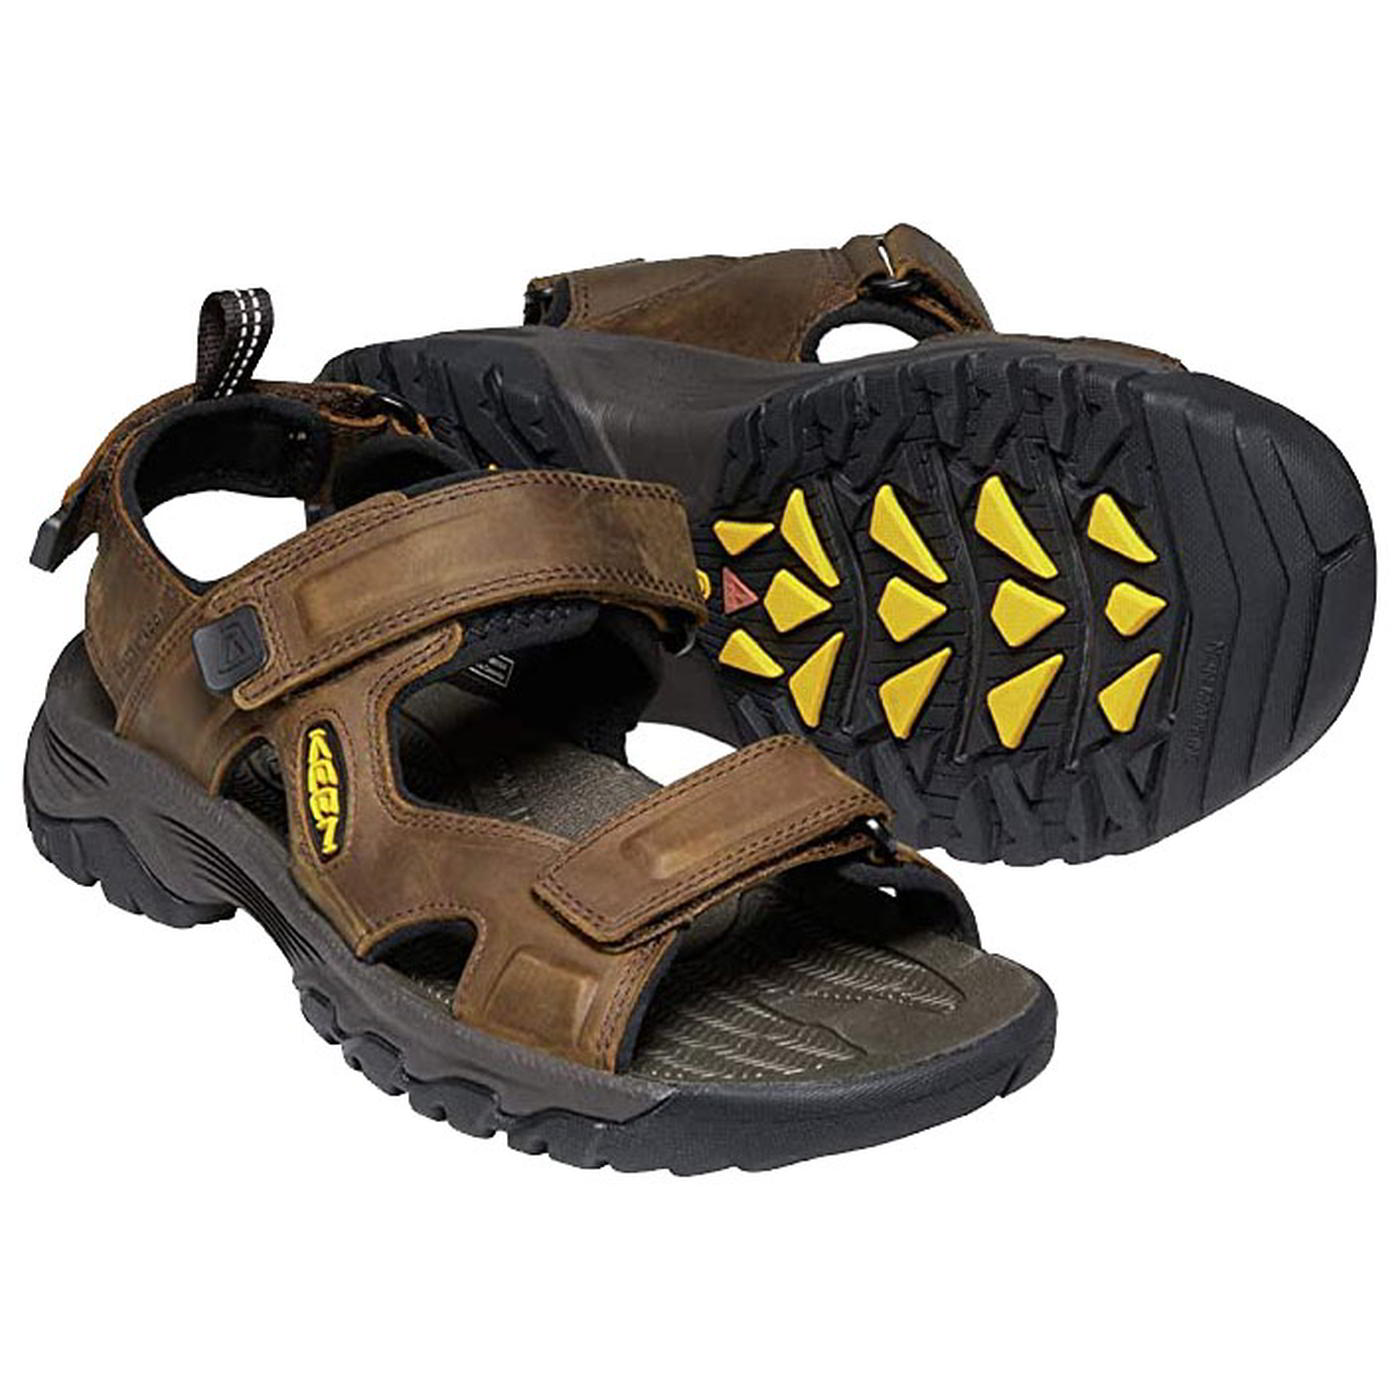 Keen Men's Targhee III Open Toe Adjustable Walking Hiking Sandal - UK 11 / US 12